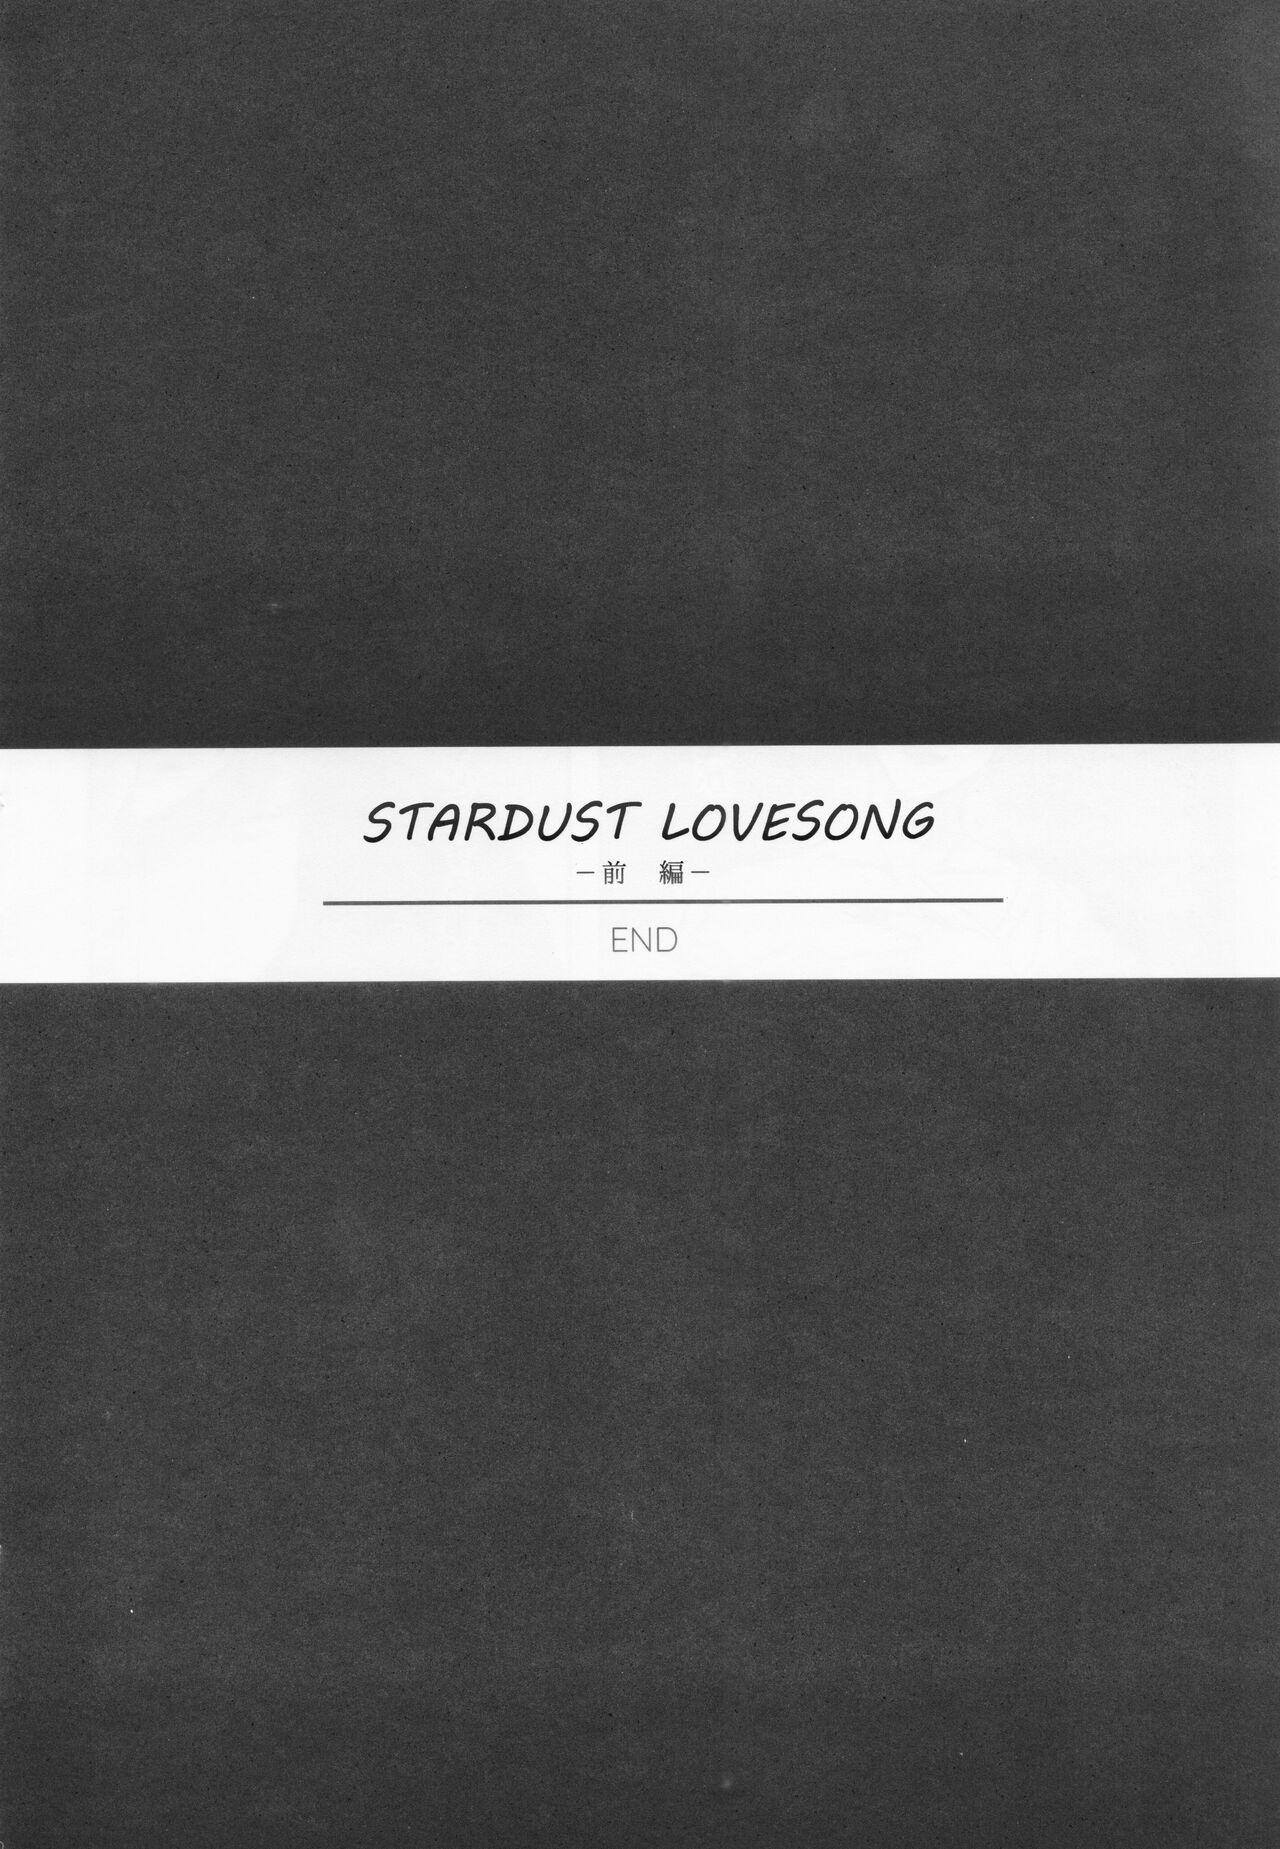 STARDUST LOVESONG top + bottom reprint 68